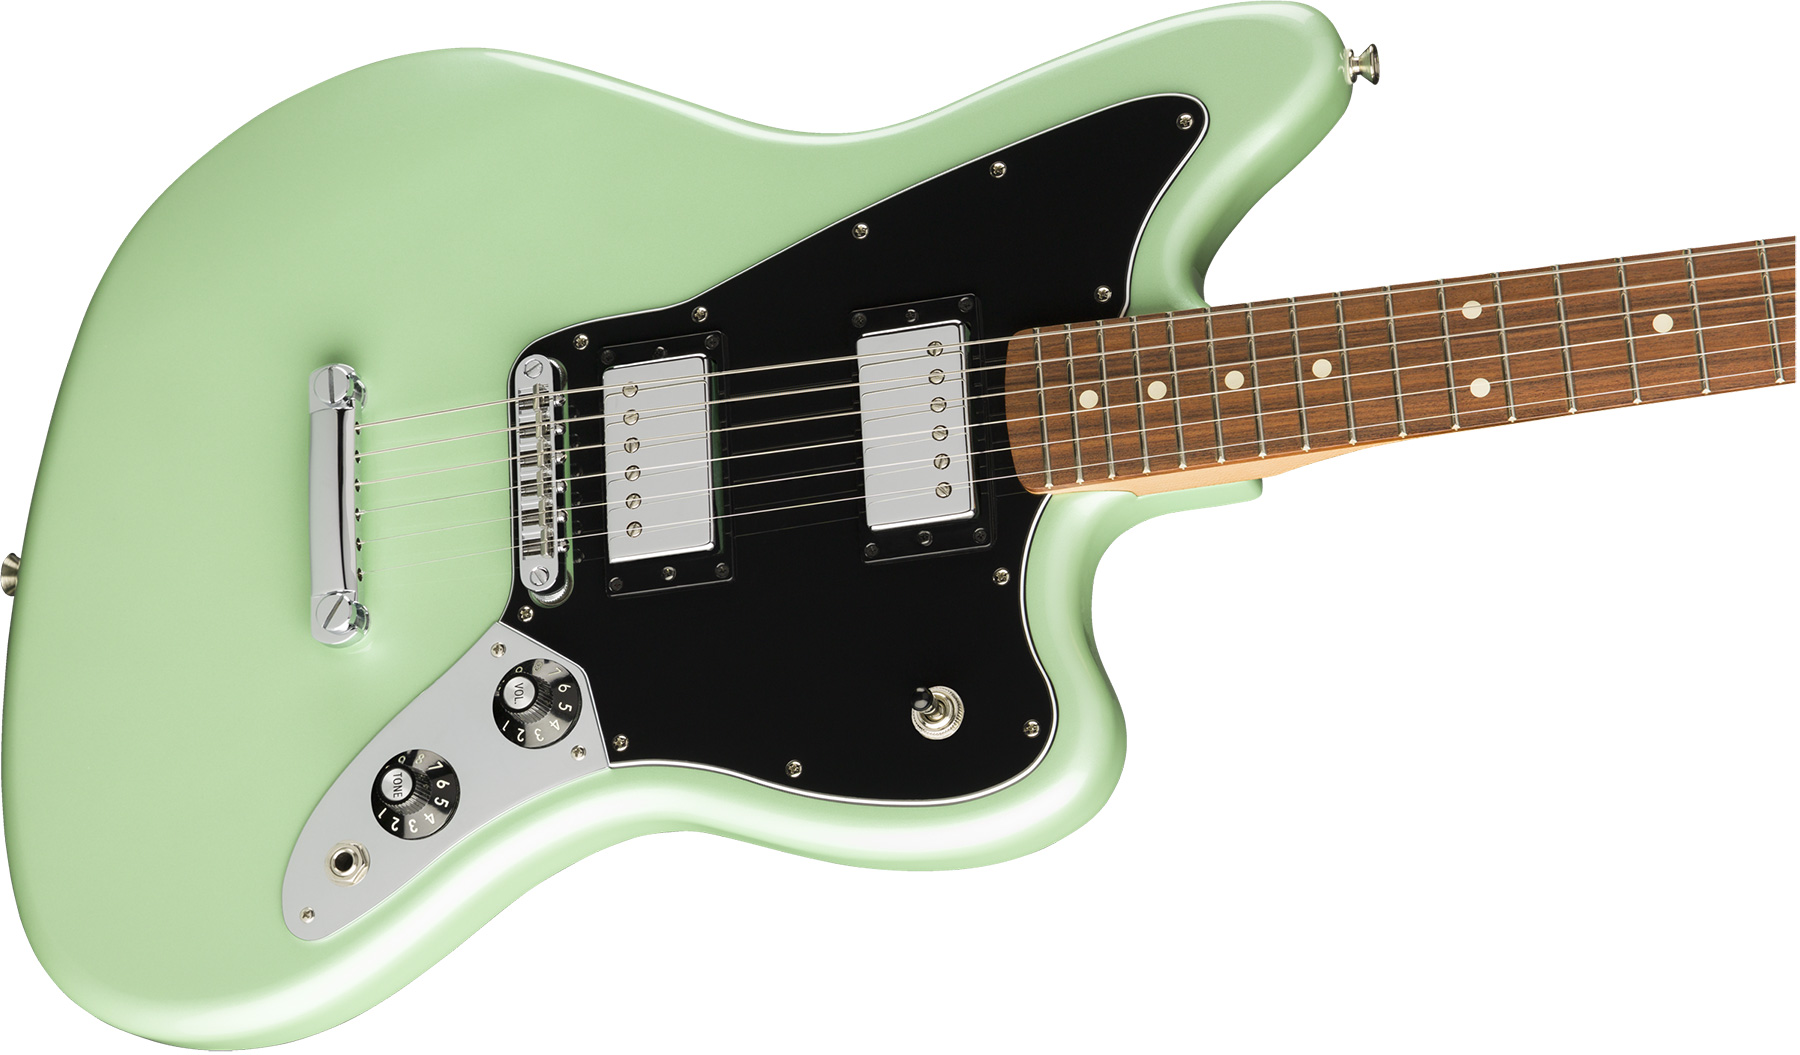 Fender Jaguar Hh Special Edition Player Fsr Mex 2h Ht Pf - Surf Pearl - Retro rock electric guitar - Variation 2